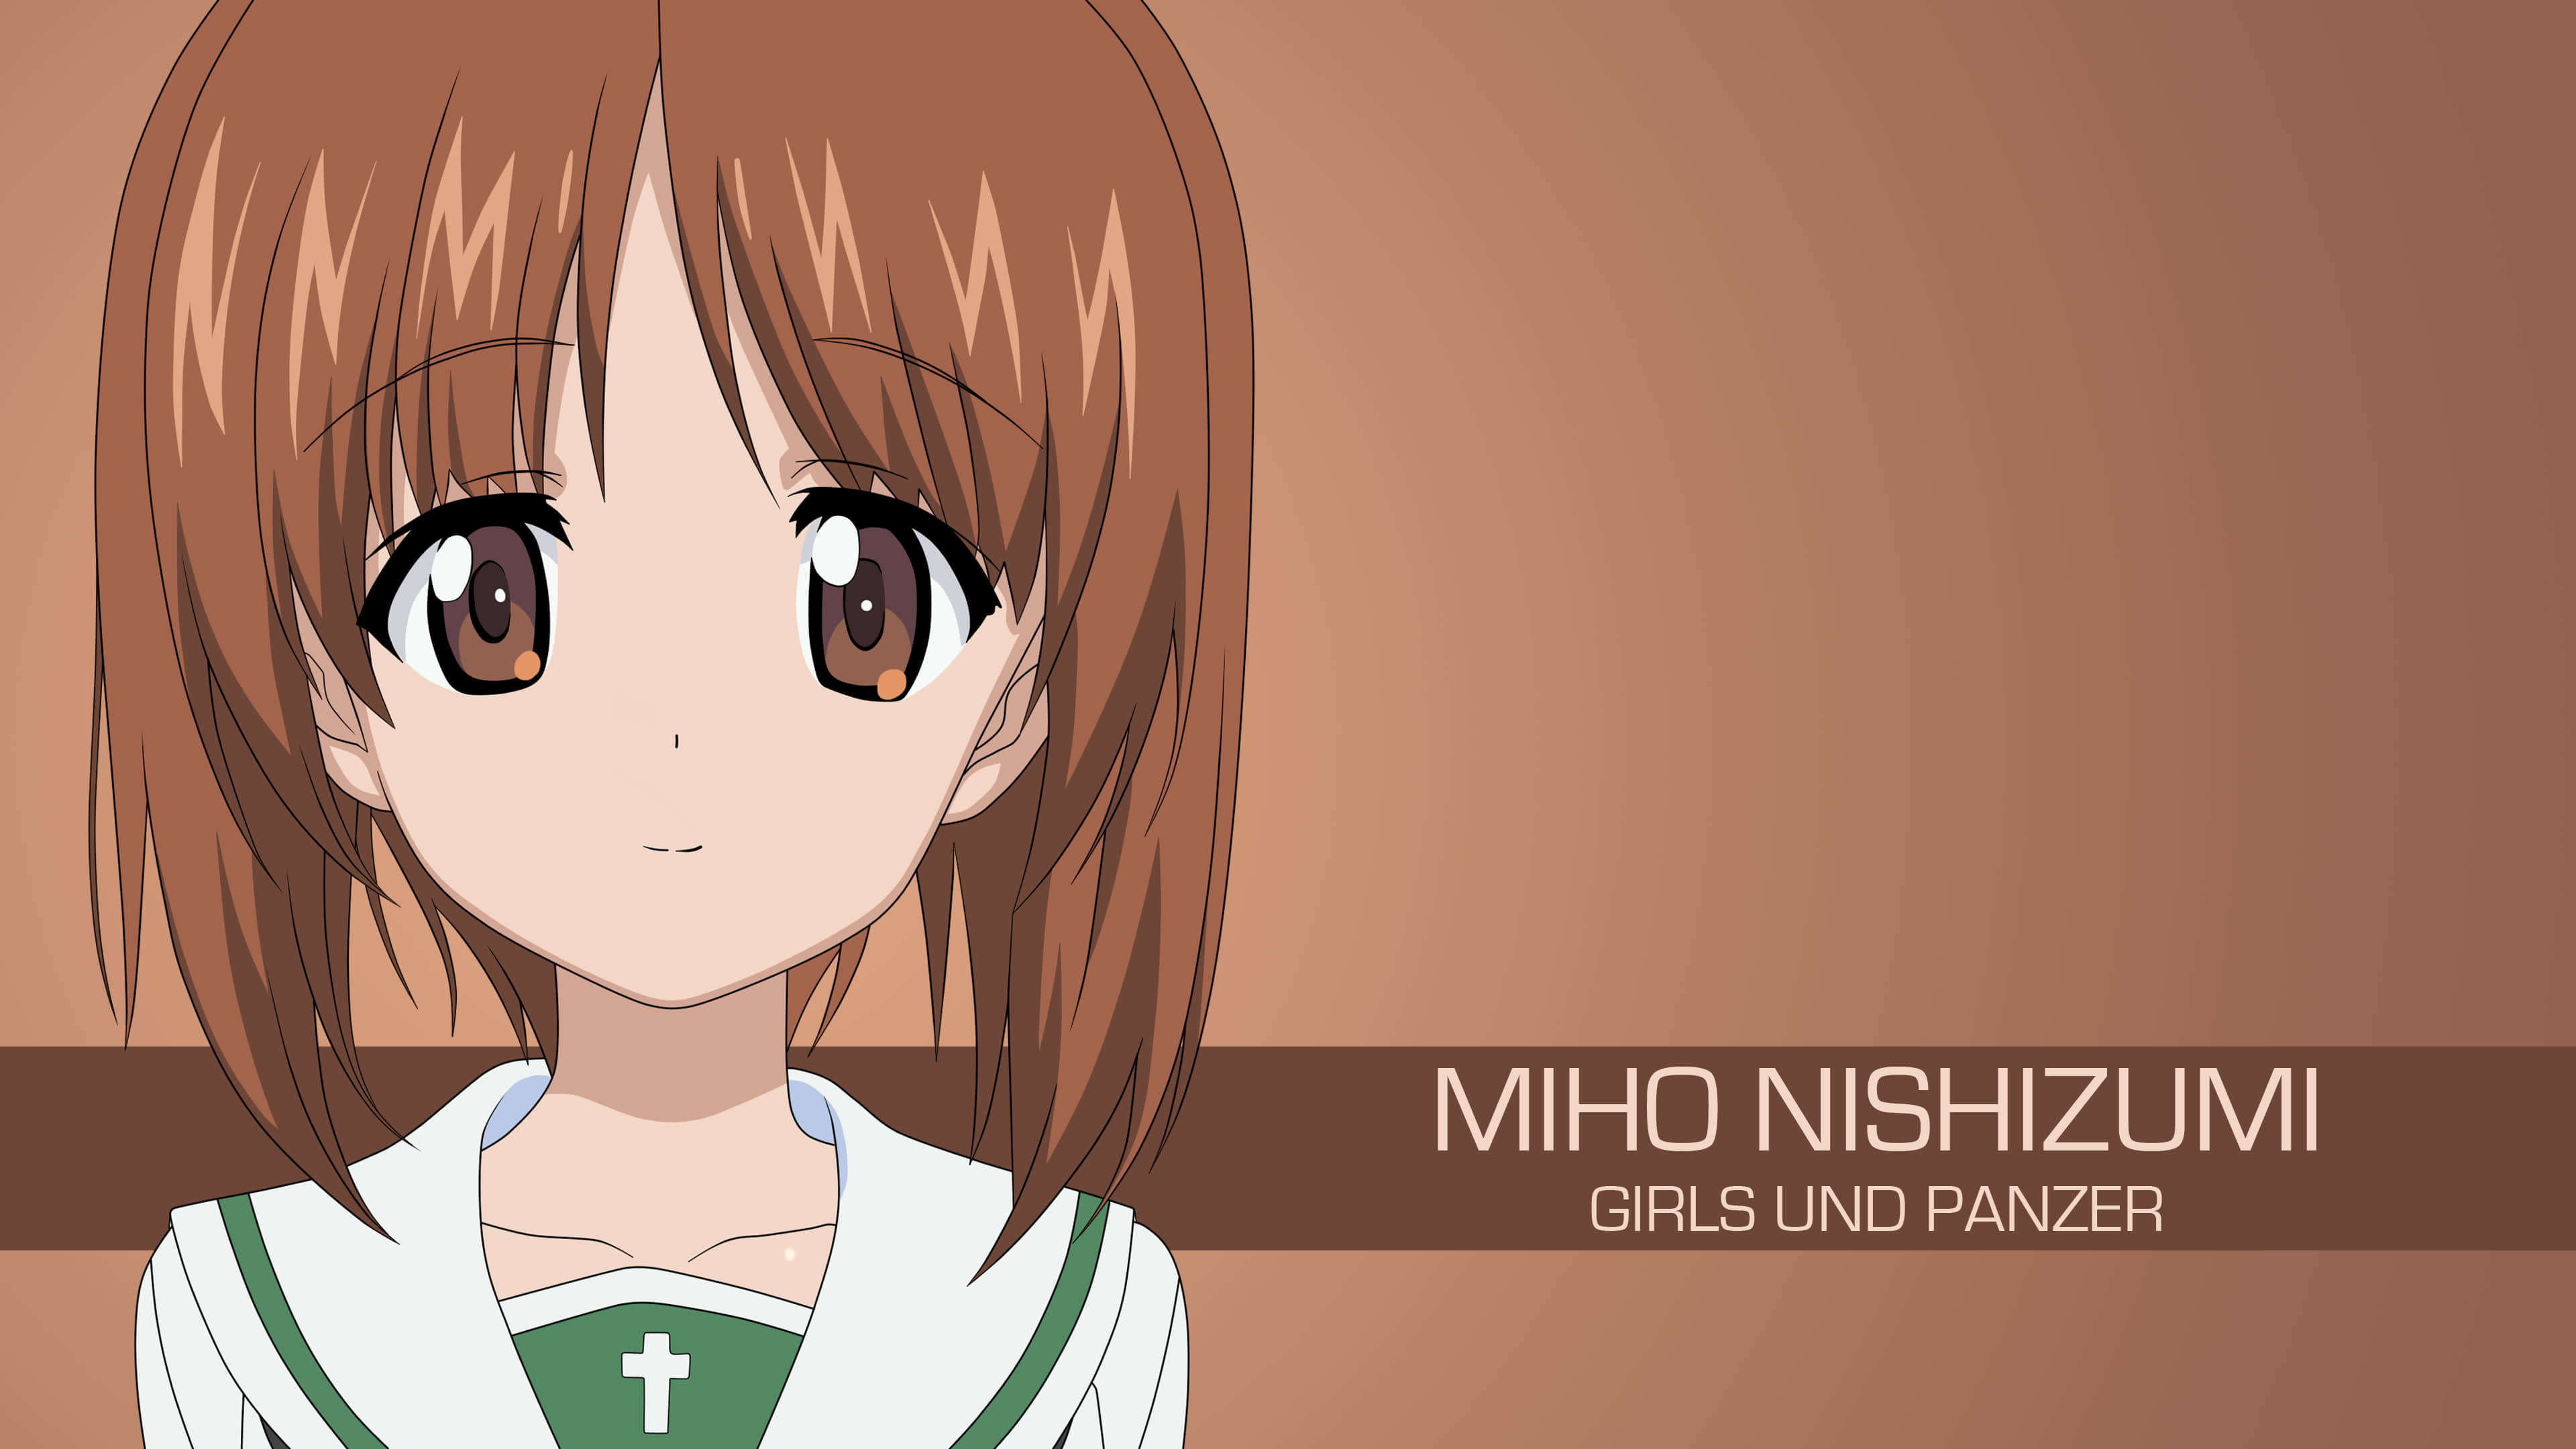 Miho Nishizumi Girls Und Panzer UHD 4K Wallpaper | Pixelz